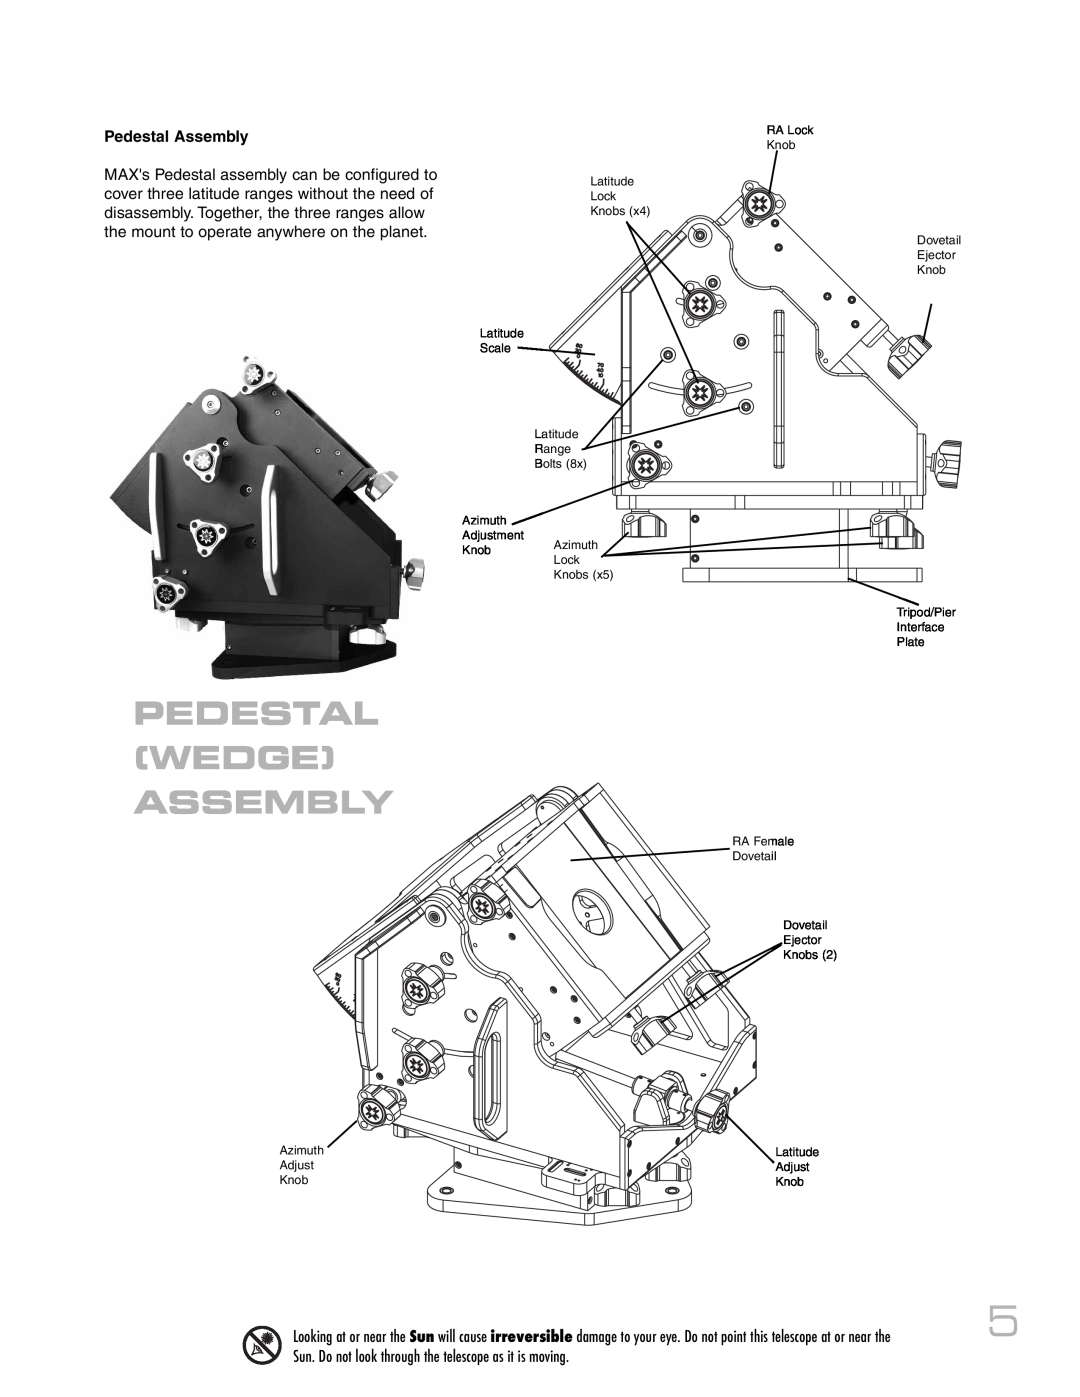 Meade RCX400 instruction manual Pedestal Wedge Assembly, Pedestal Assembly 